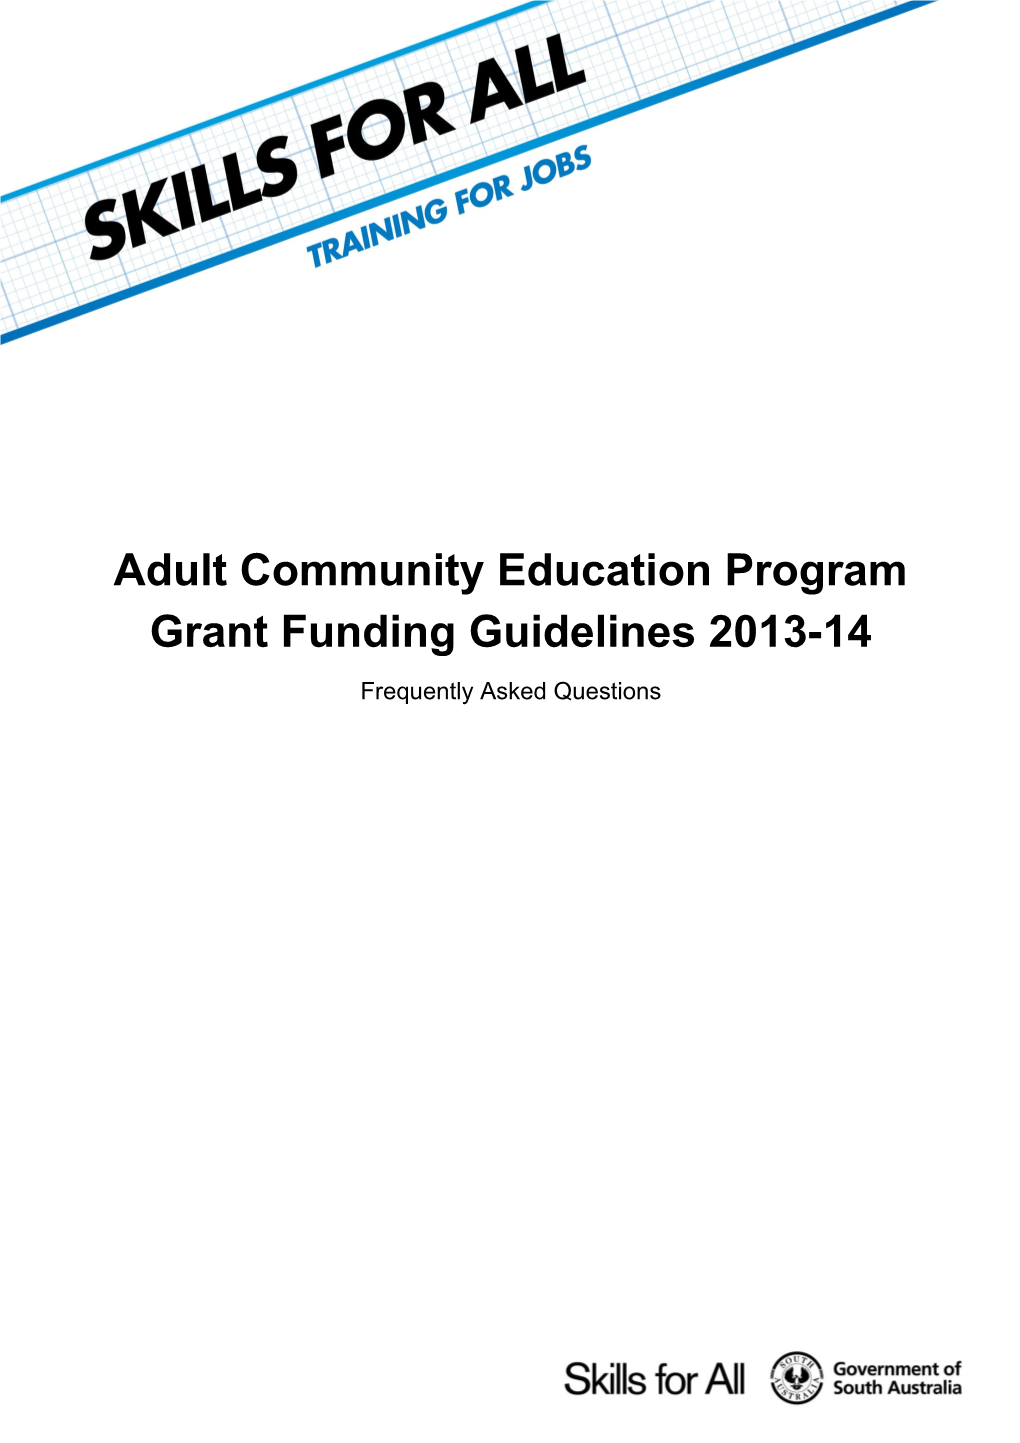 Adult Community Education Program Grant Funding Guidelines 2013-14